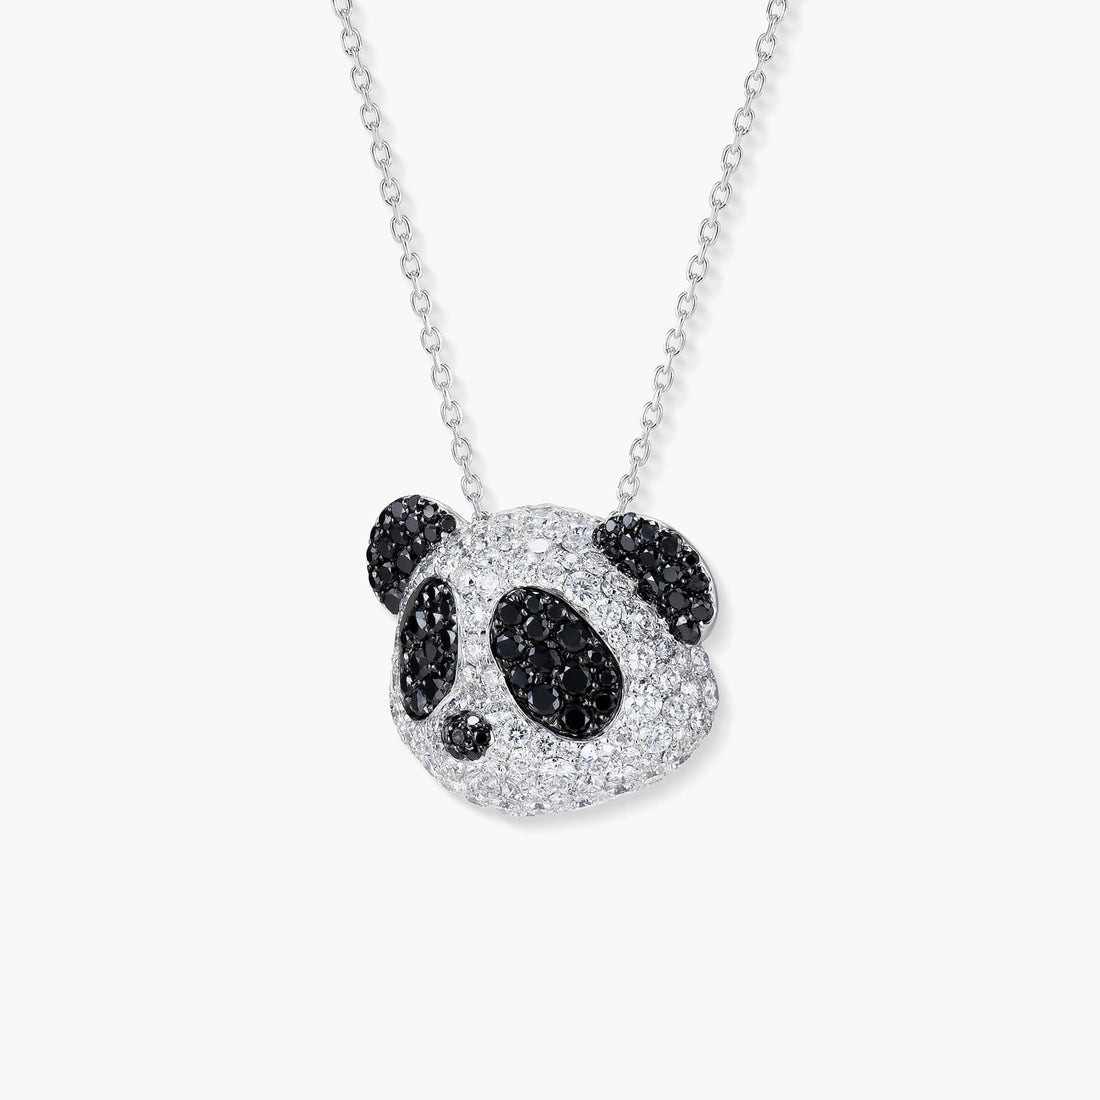 18CT White Gold and Diamond Panda Pendant Necklace - Robert Anthony Jewellers, Edinburgh